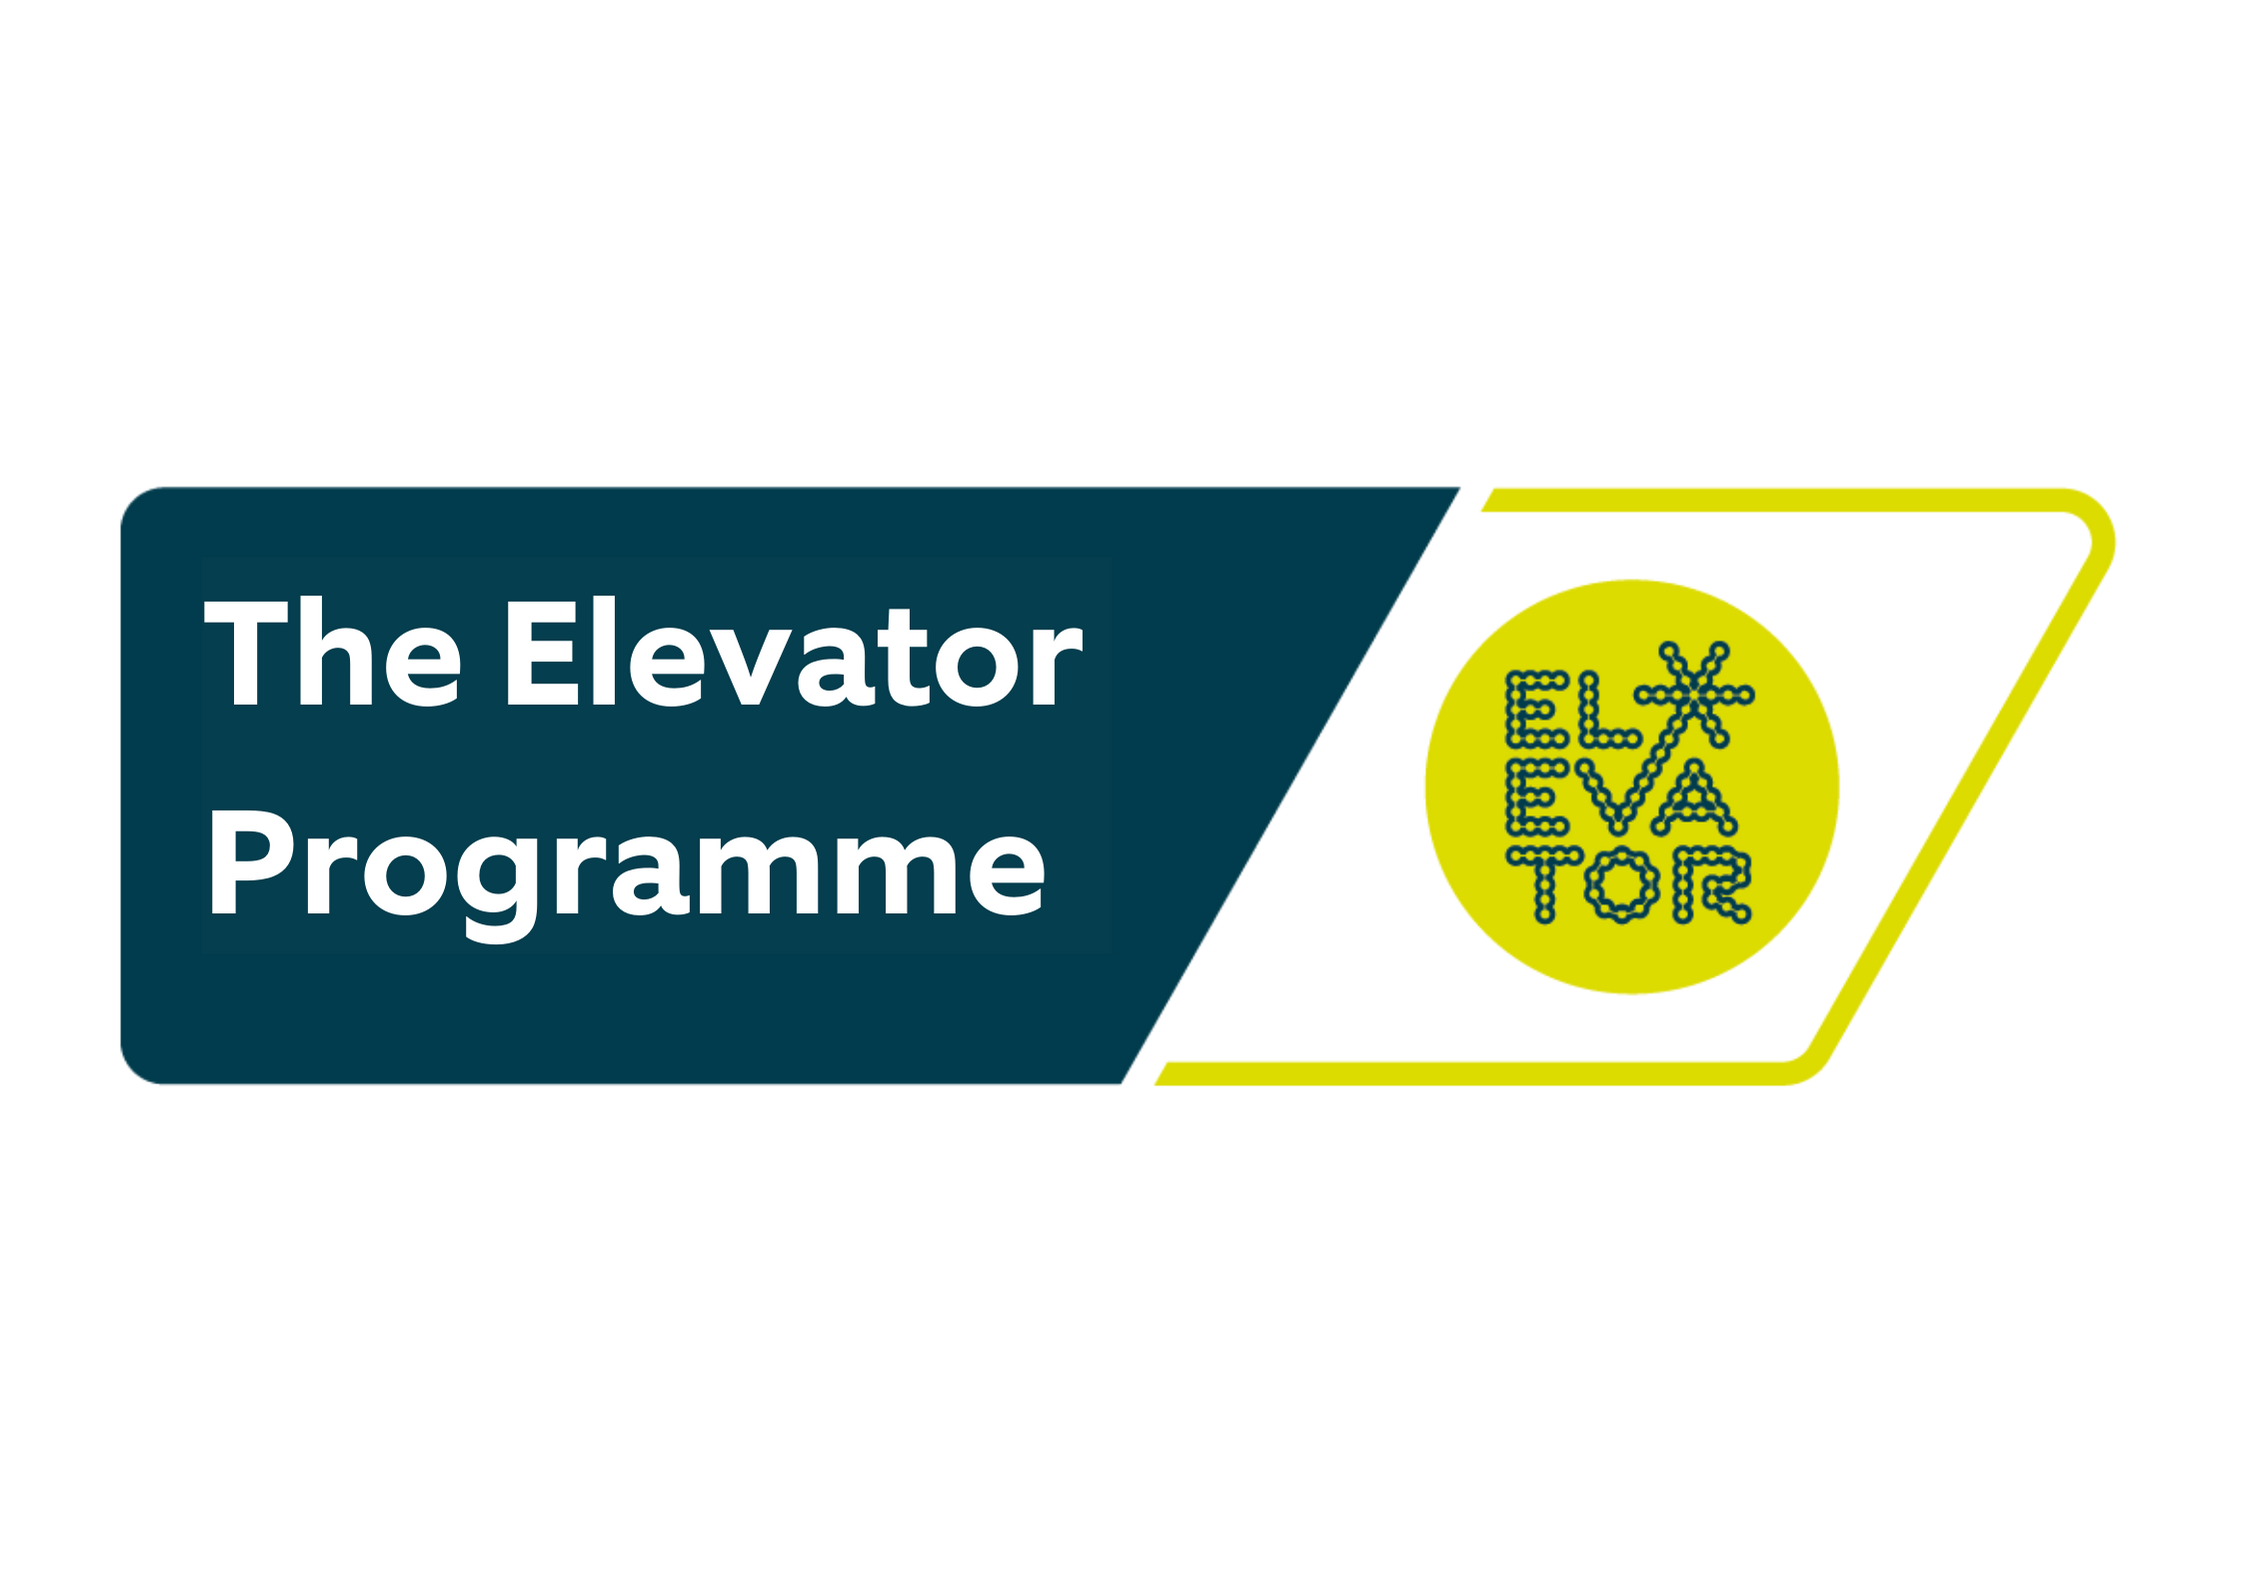 The Elevator Programme